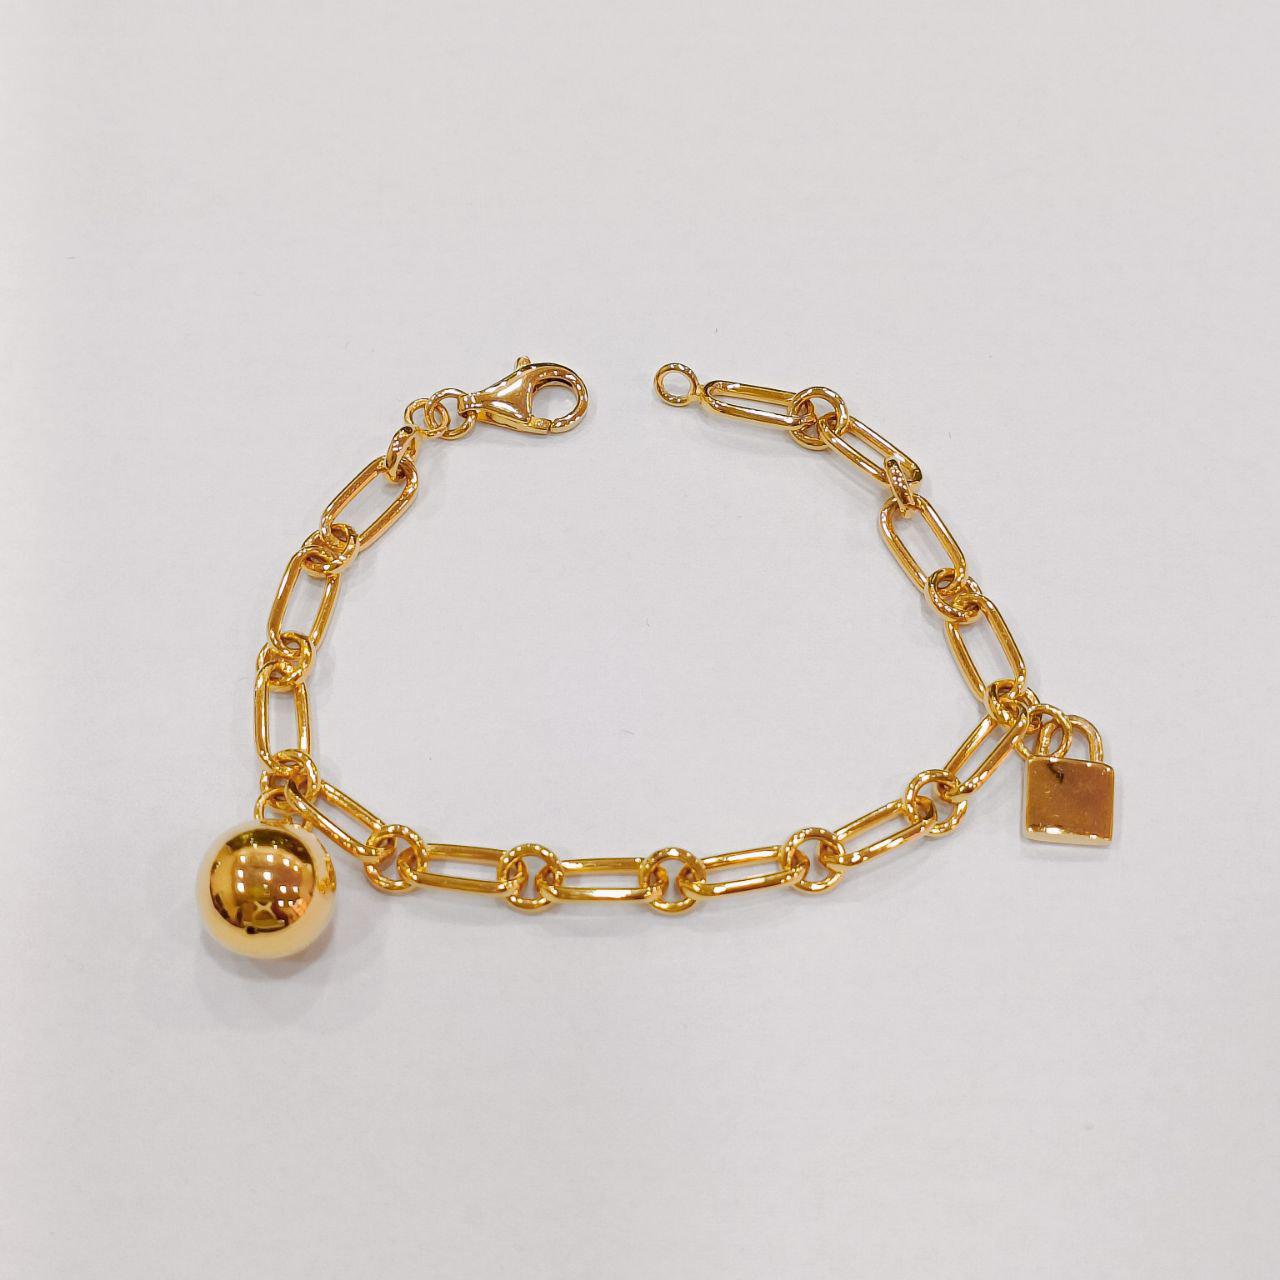 22k / 916 Gold Clip design with Ball and Lock bracelet-916 gold-Best Gold Shop